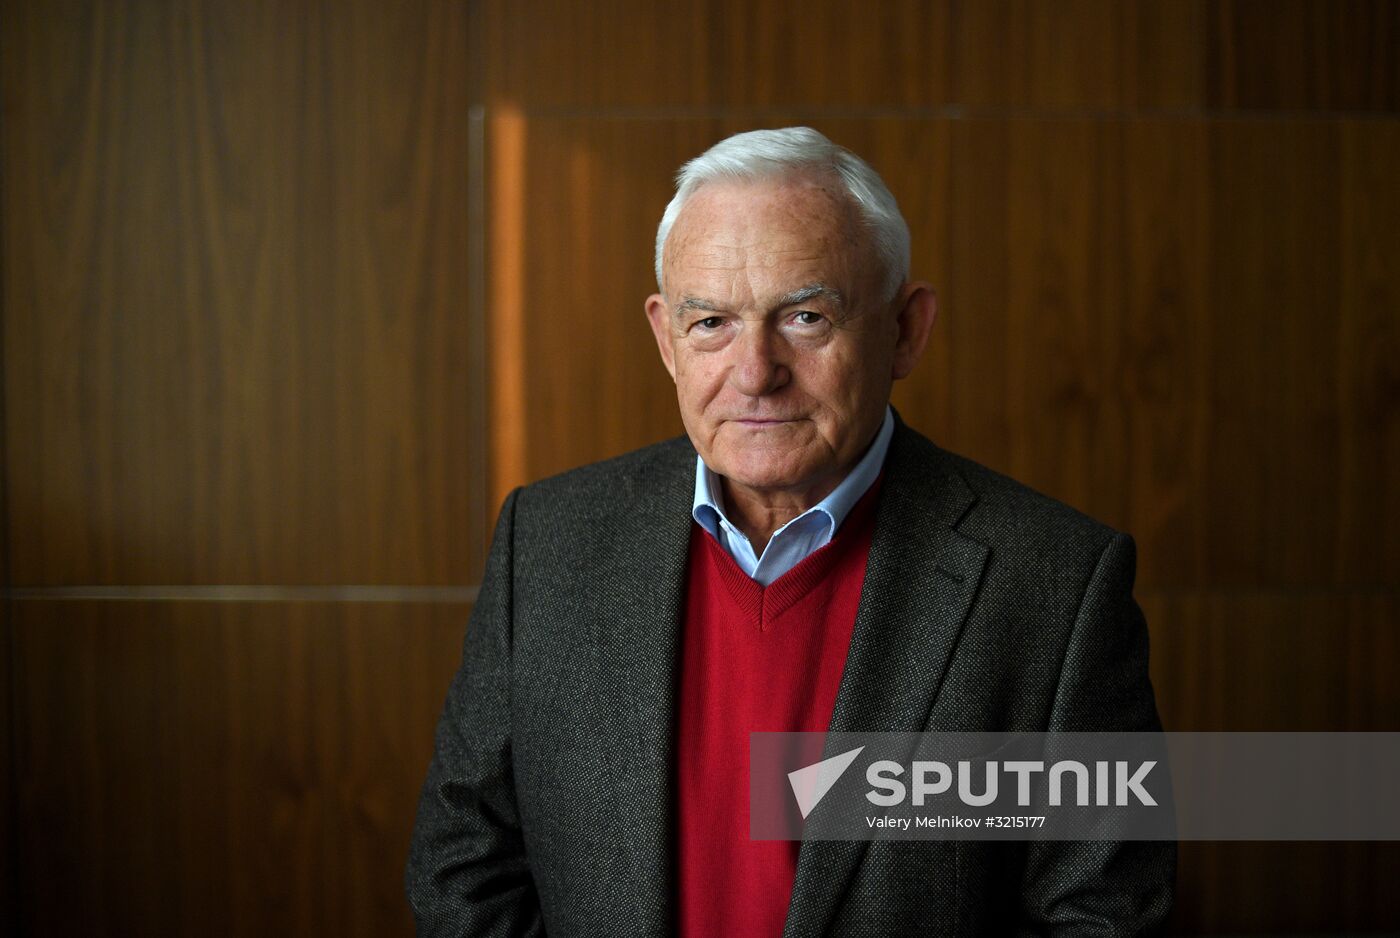 Interview with Poland's ex PM Leszek Miller